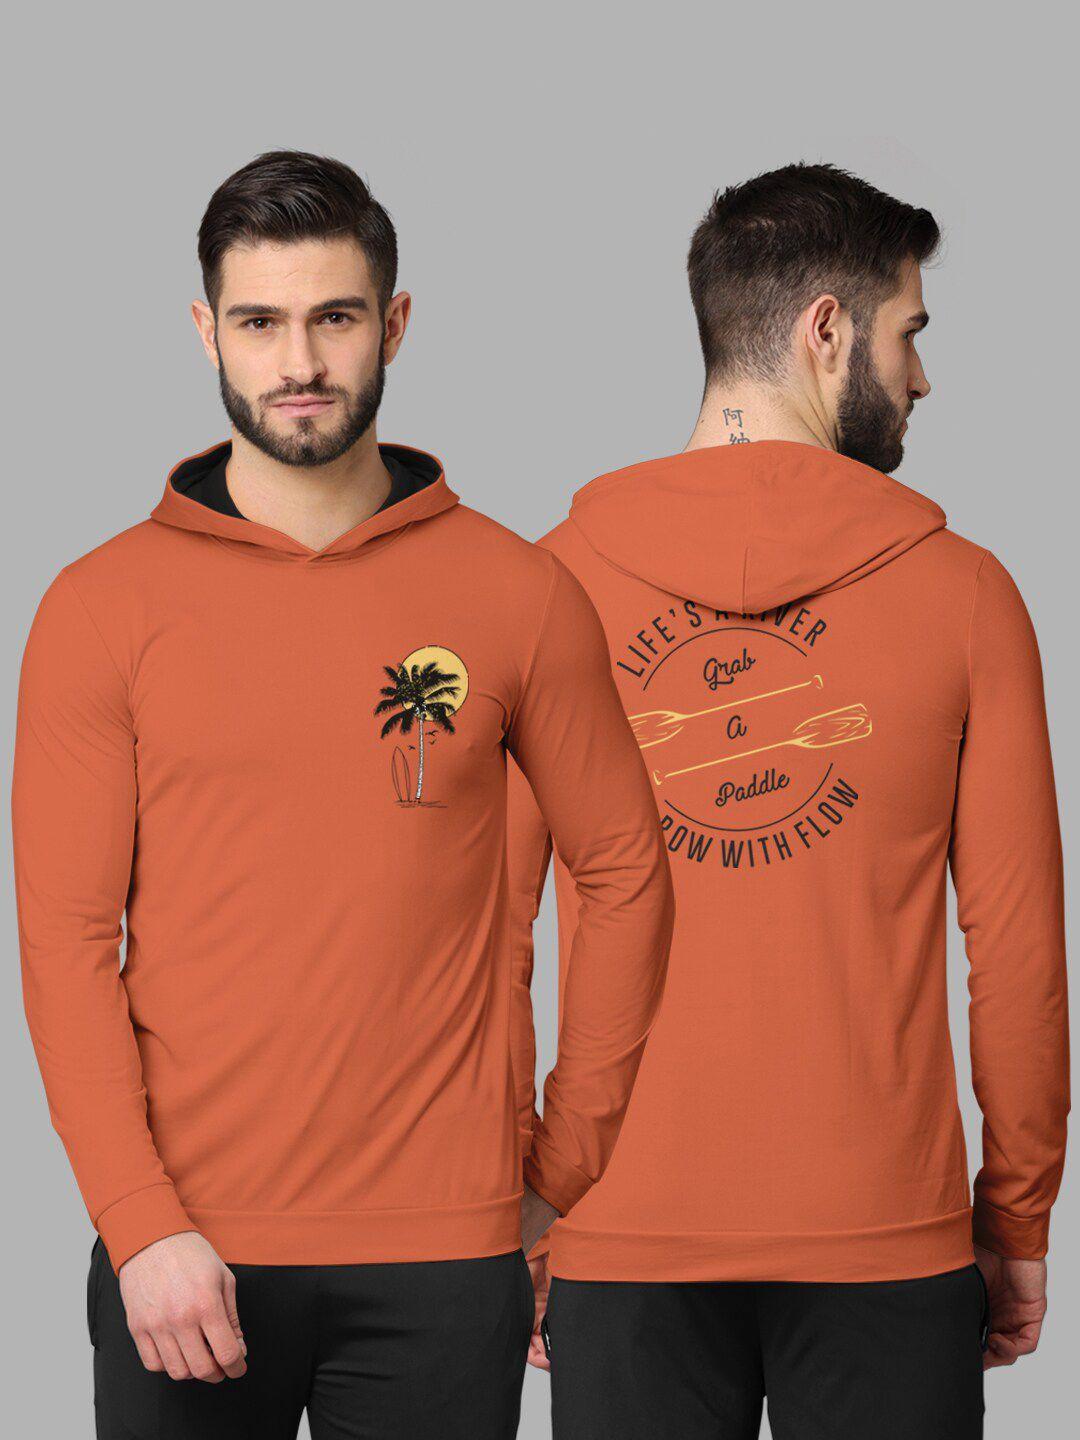 bullmer-men-orange-typography-printed-cotton-t-shirt